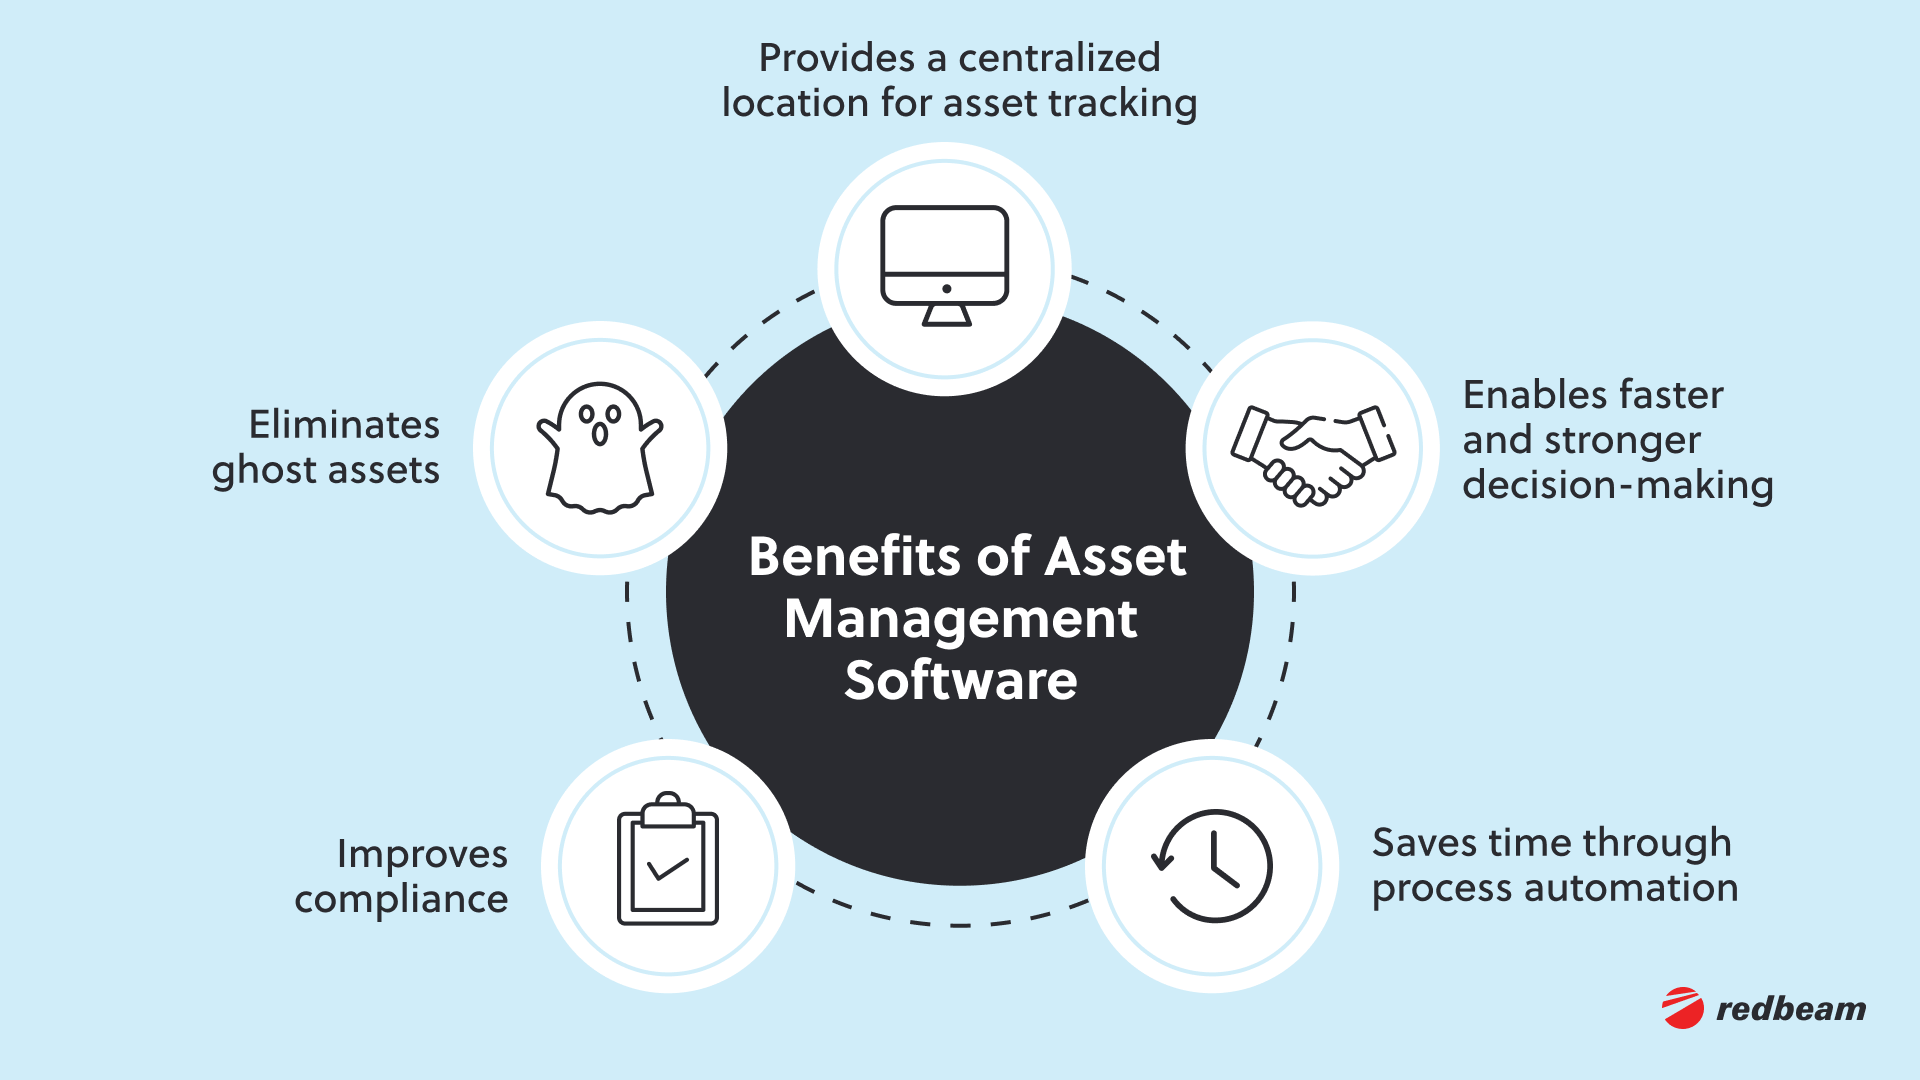 4. Benefits of Asset Management Software